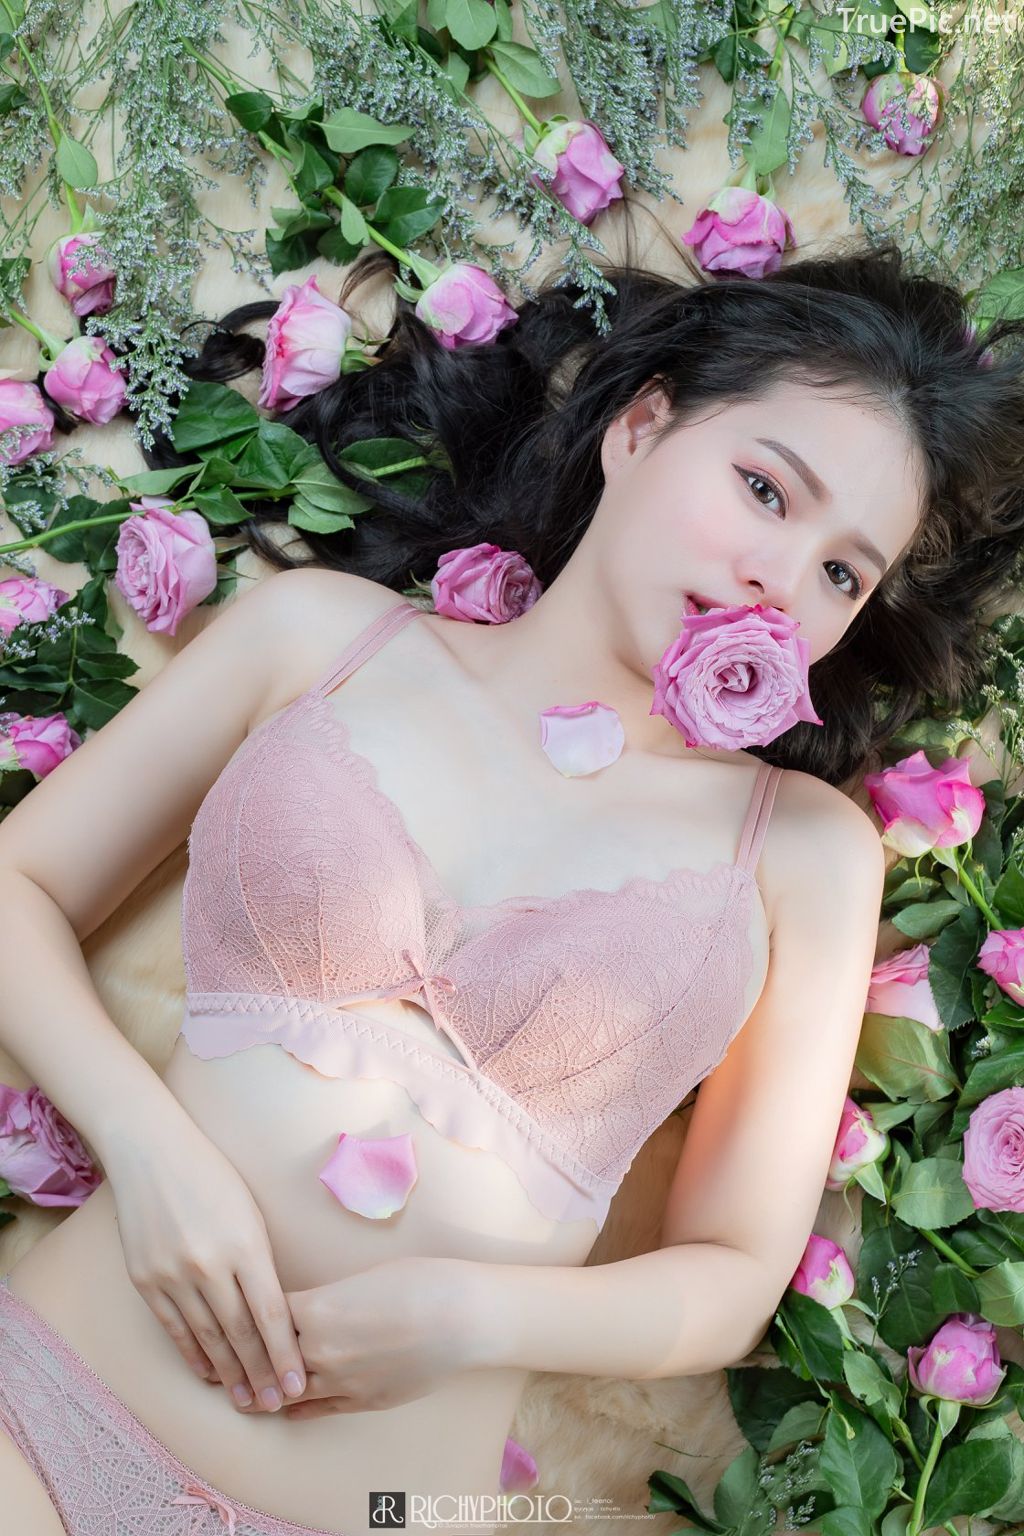 Image-Thailand-Cute-Model-Tuktick-Ponthip-Tantisuwanna-Girl-On-Flower-TruePic.net- Picture-17